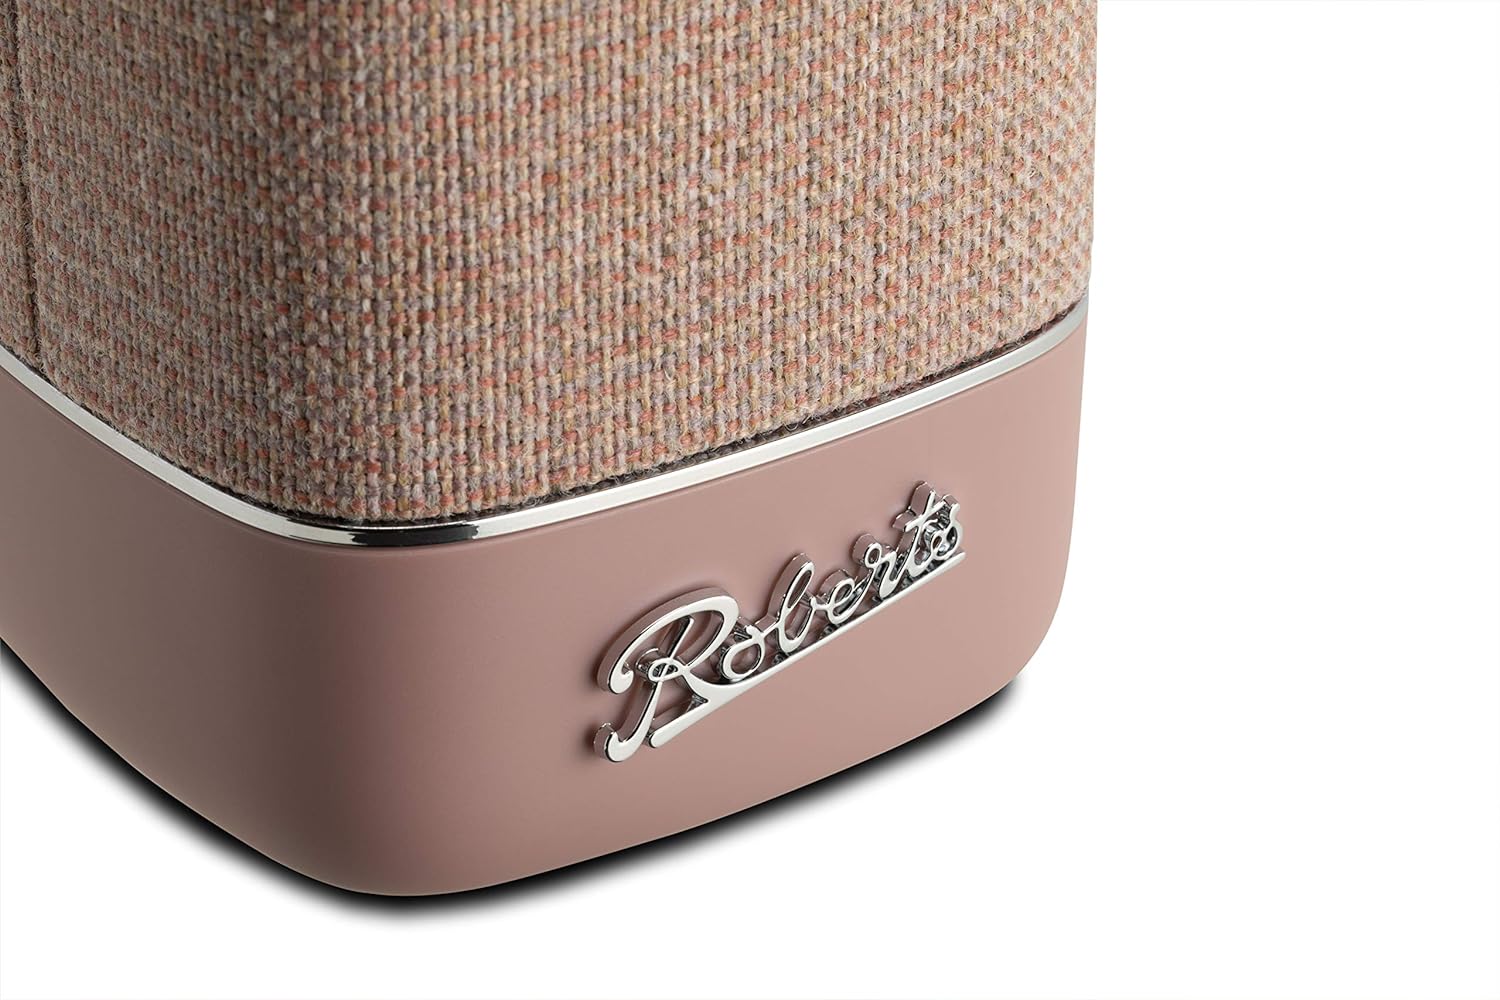 Roberts Beacon 320 Wireless Portable Speaker - Pink - Pristine